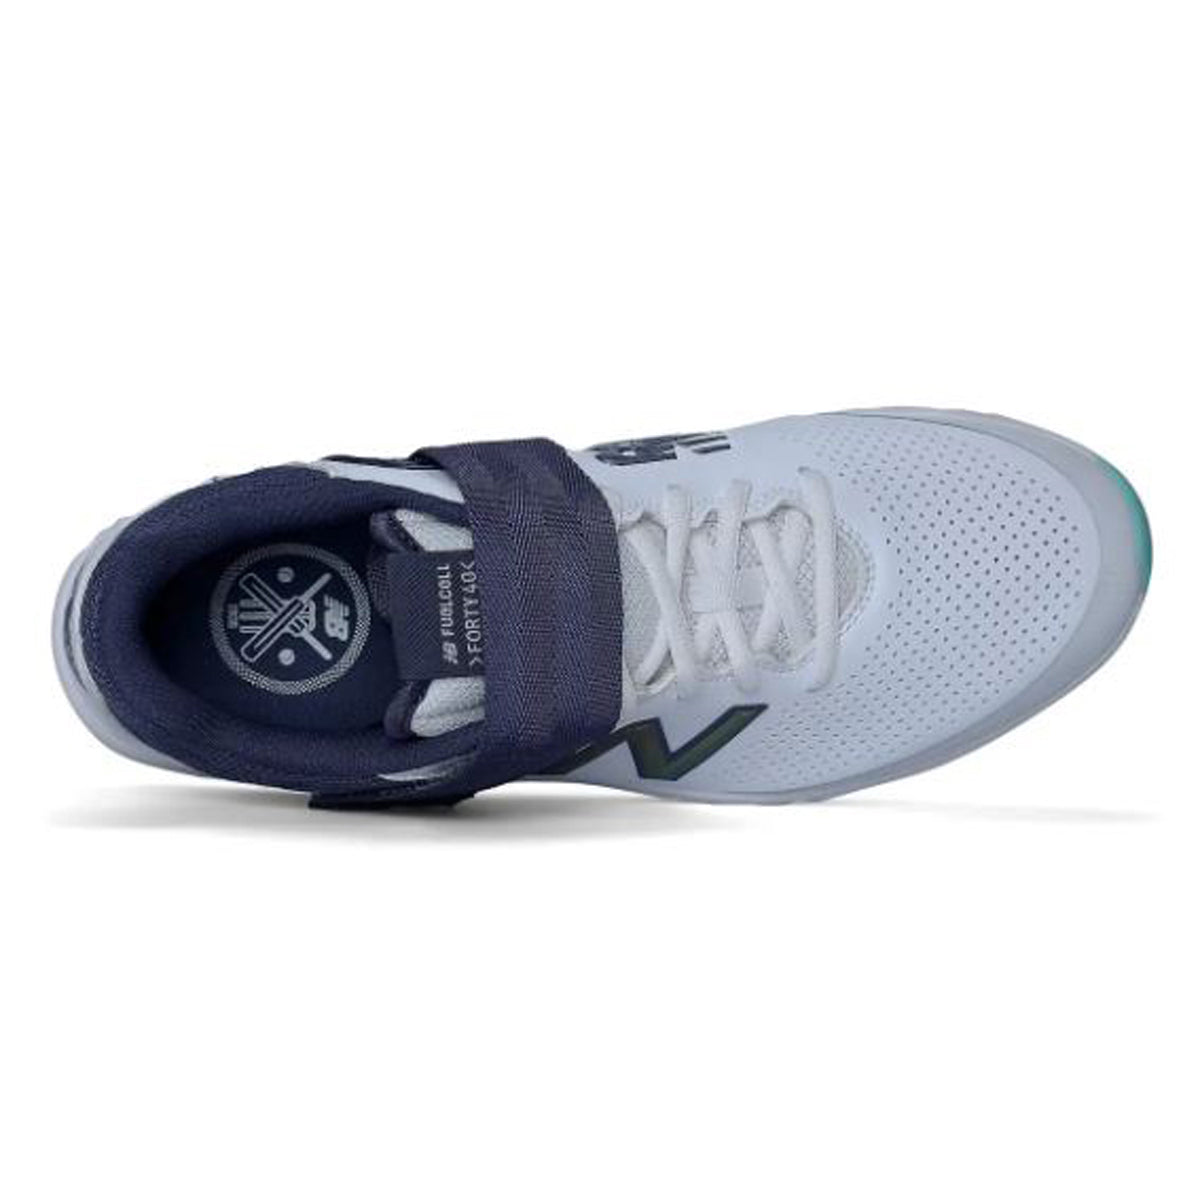 New Balance CK4040J5 Metal Spike Cricket Shoes, White/Cyber Jade - Best Price online Prokicksports.com